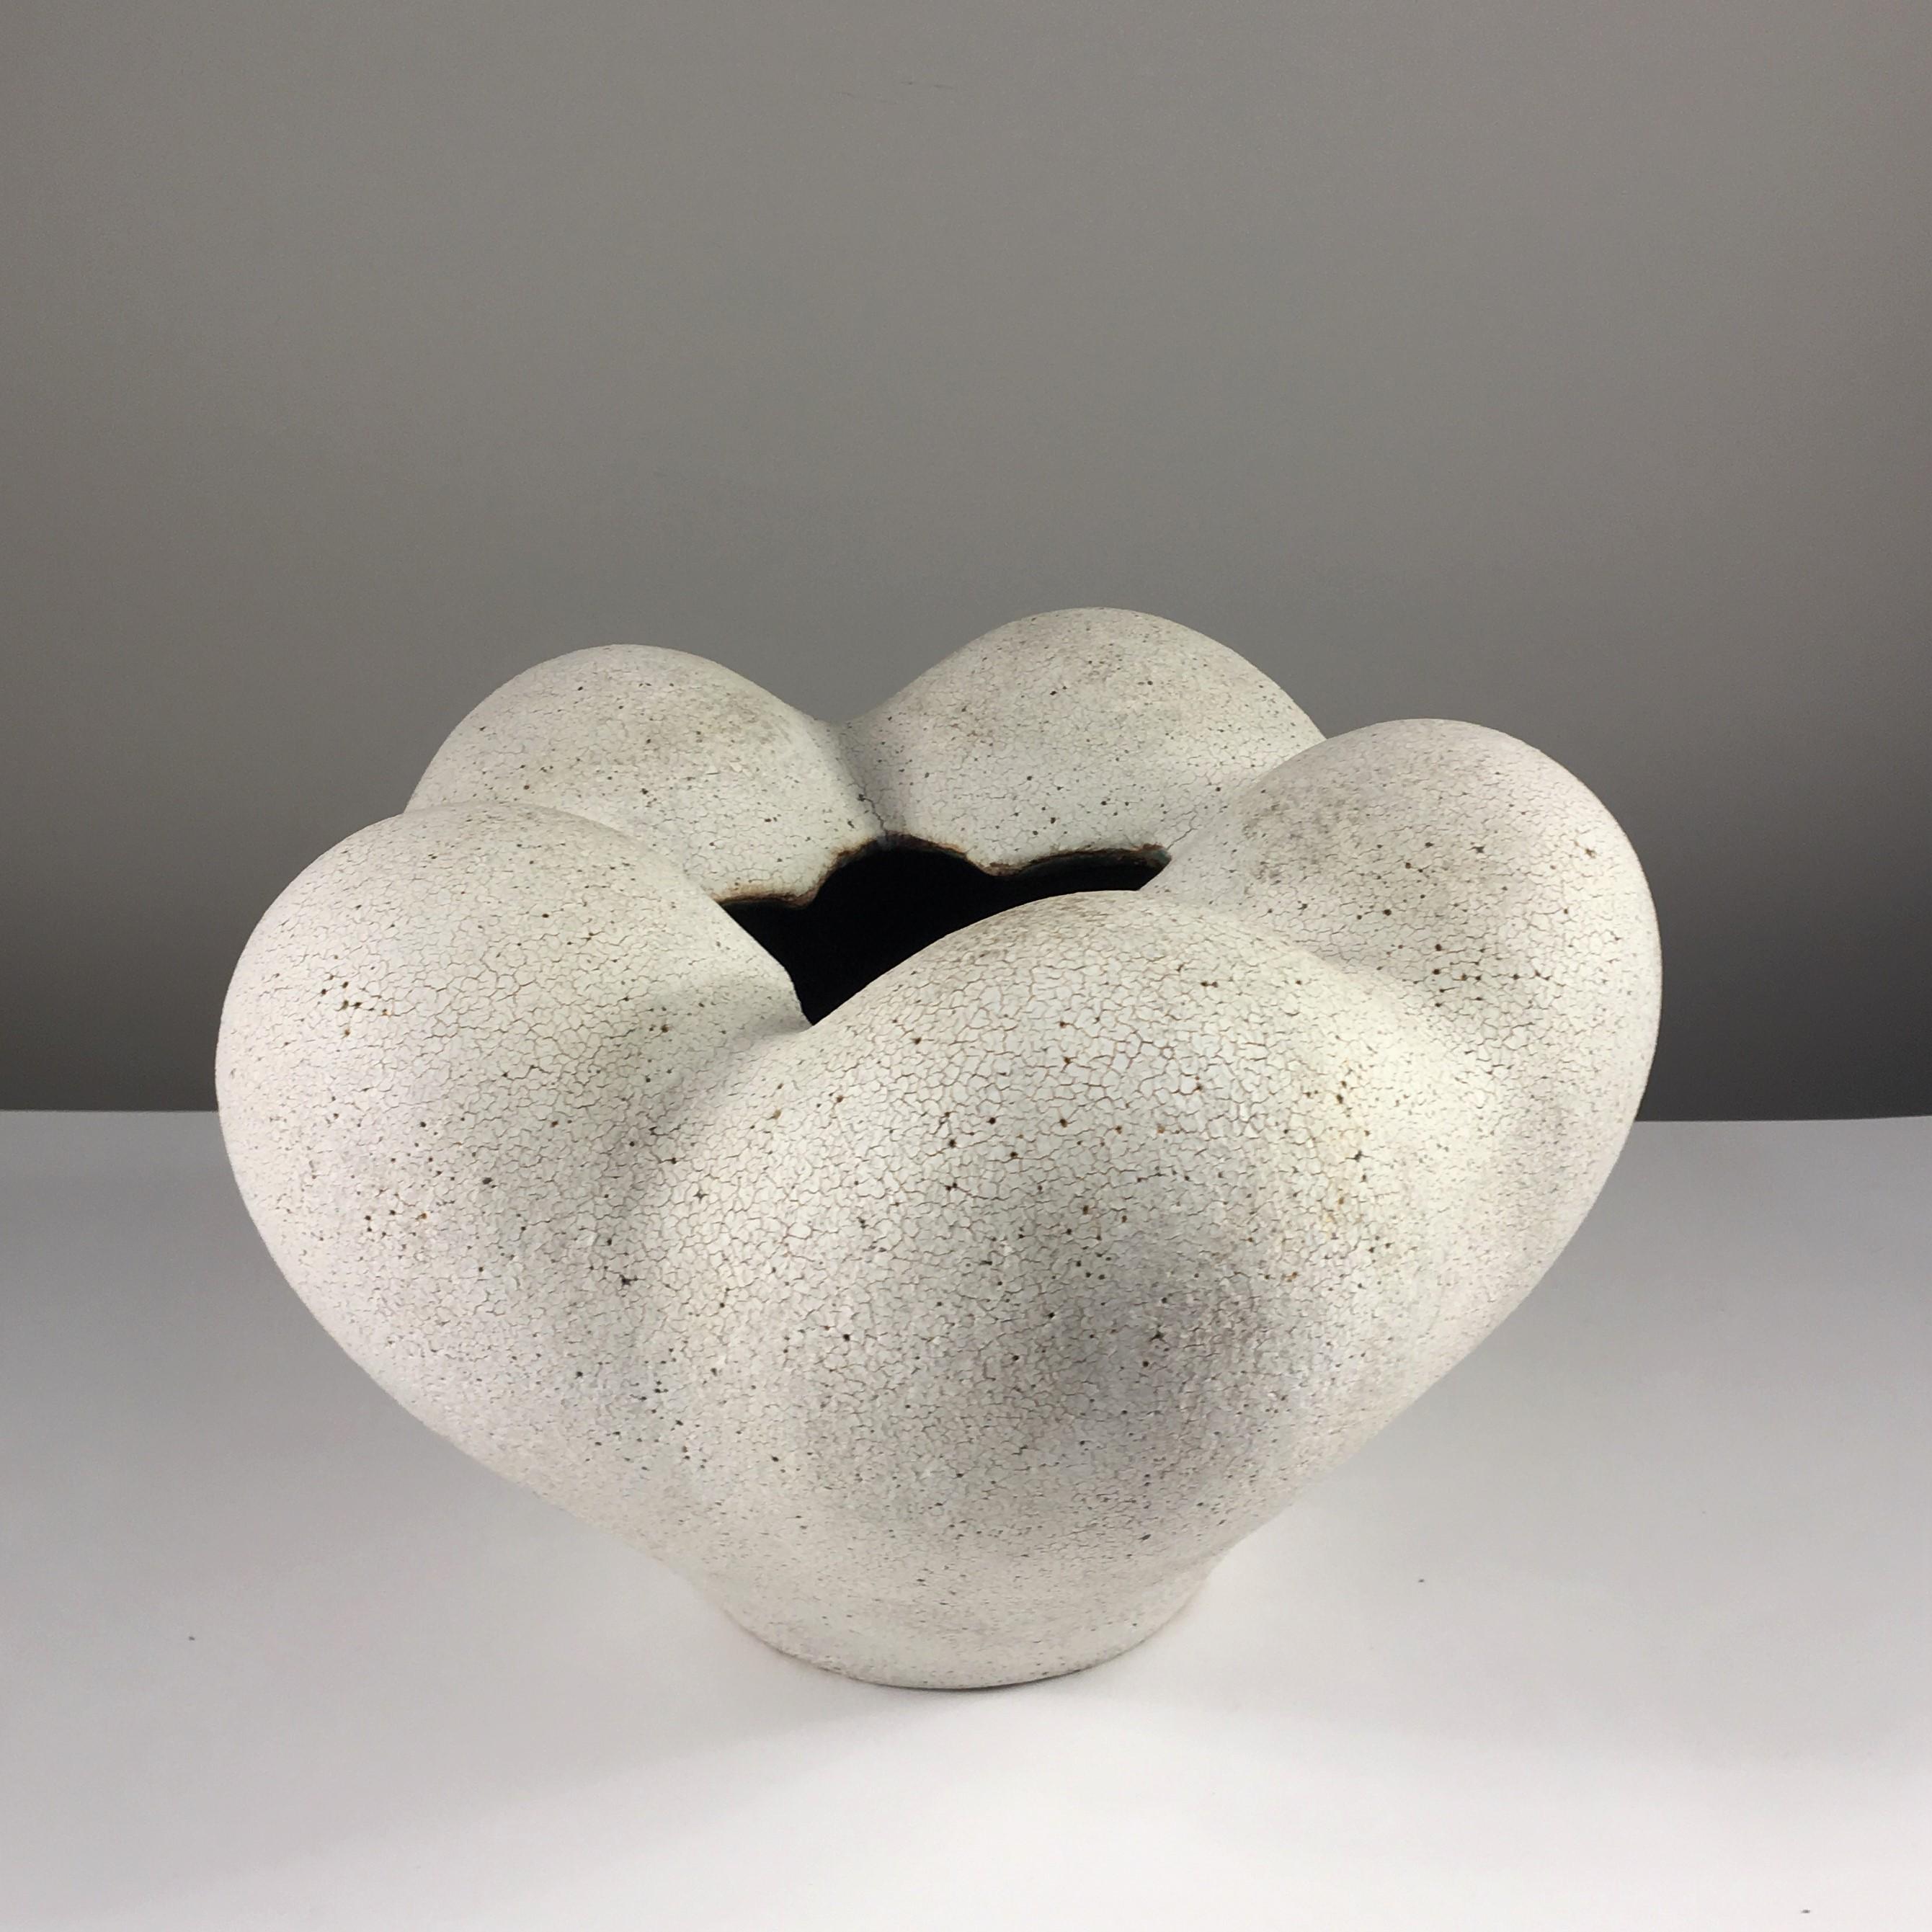 Ceramic blossom vase by Yumiko Kuga. Measures: Height 8